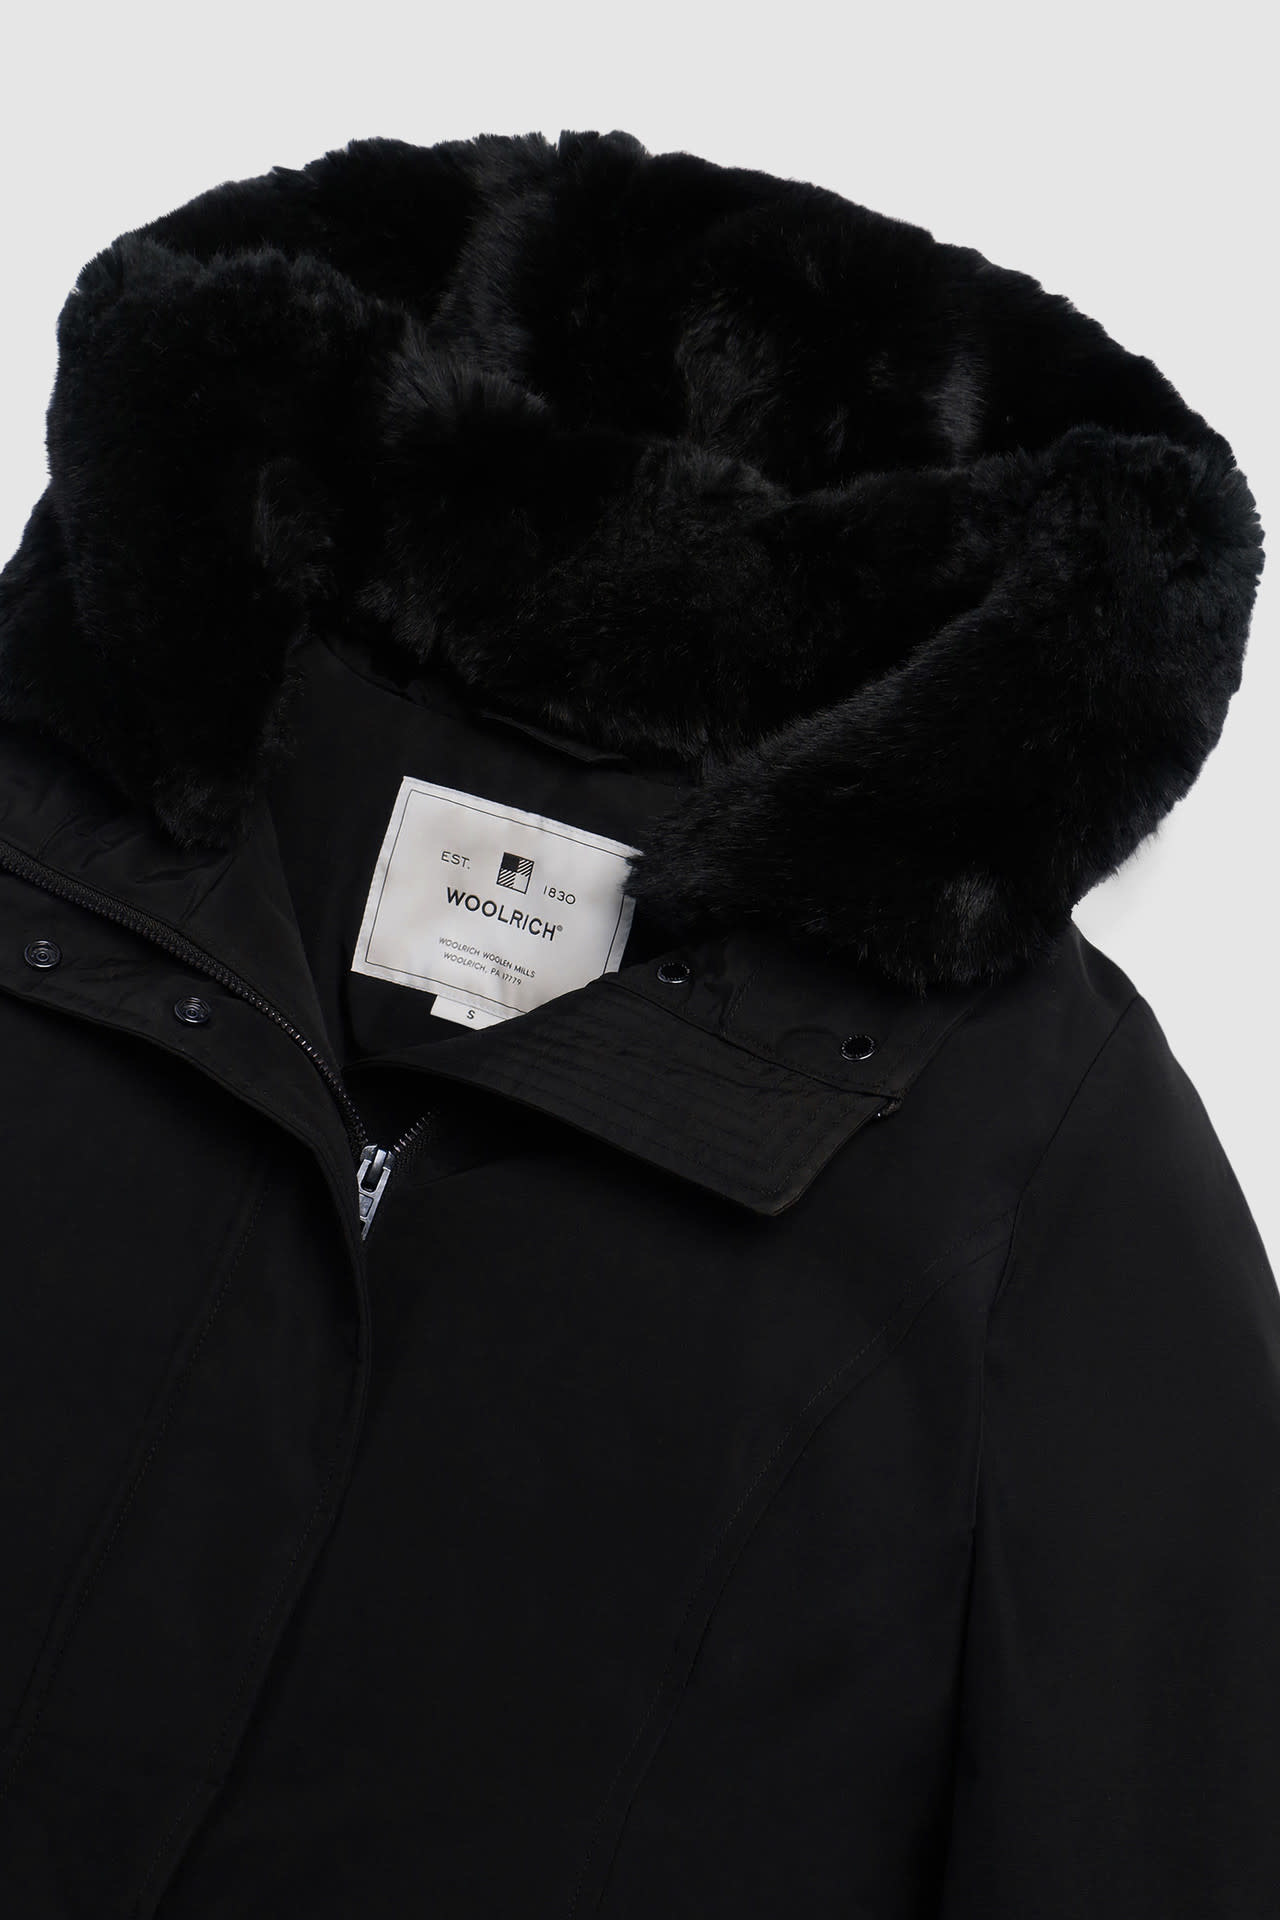 specificatie sap Kamer Woolrich Woolrich Luxury Boulder coat zwart - RIVS